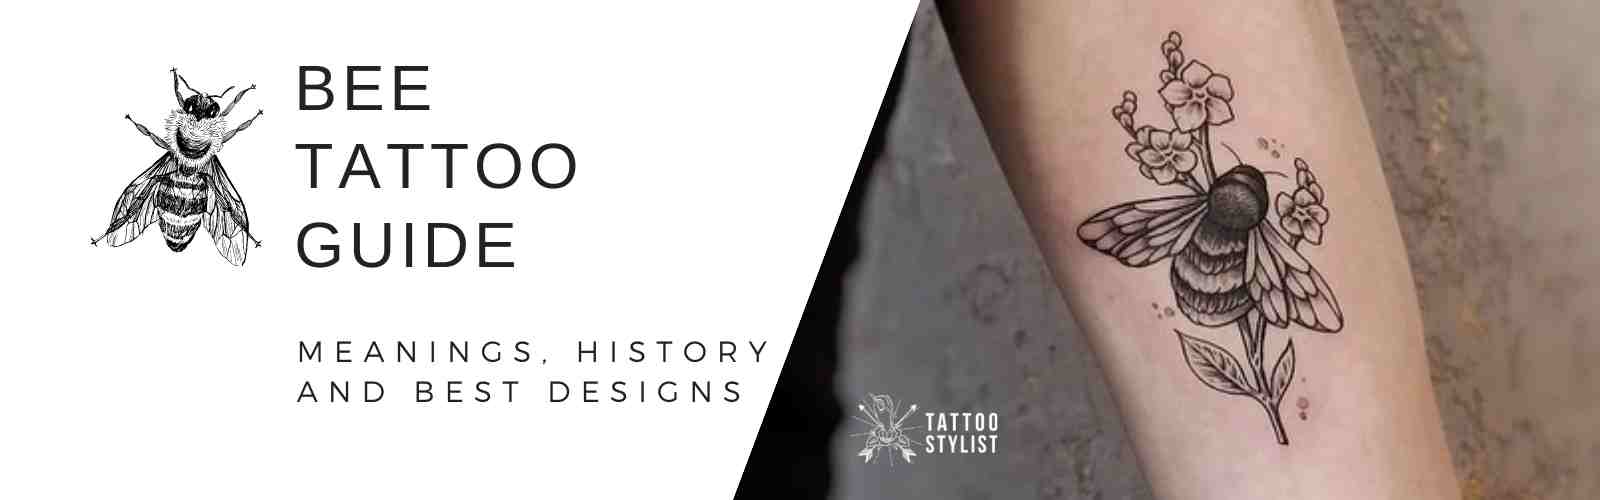 bee tattoo ideas featured image